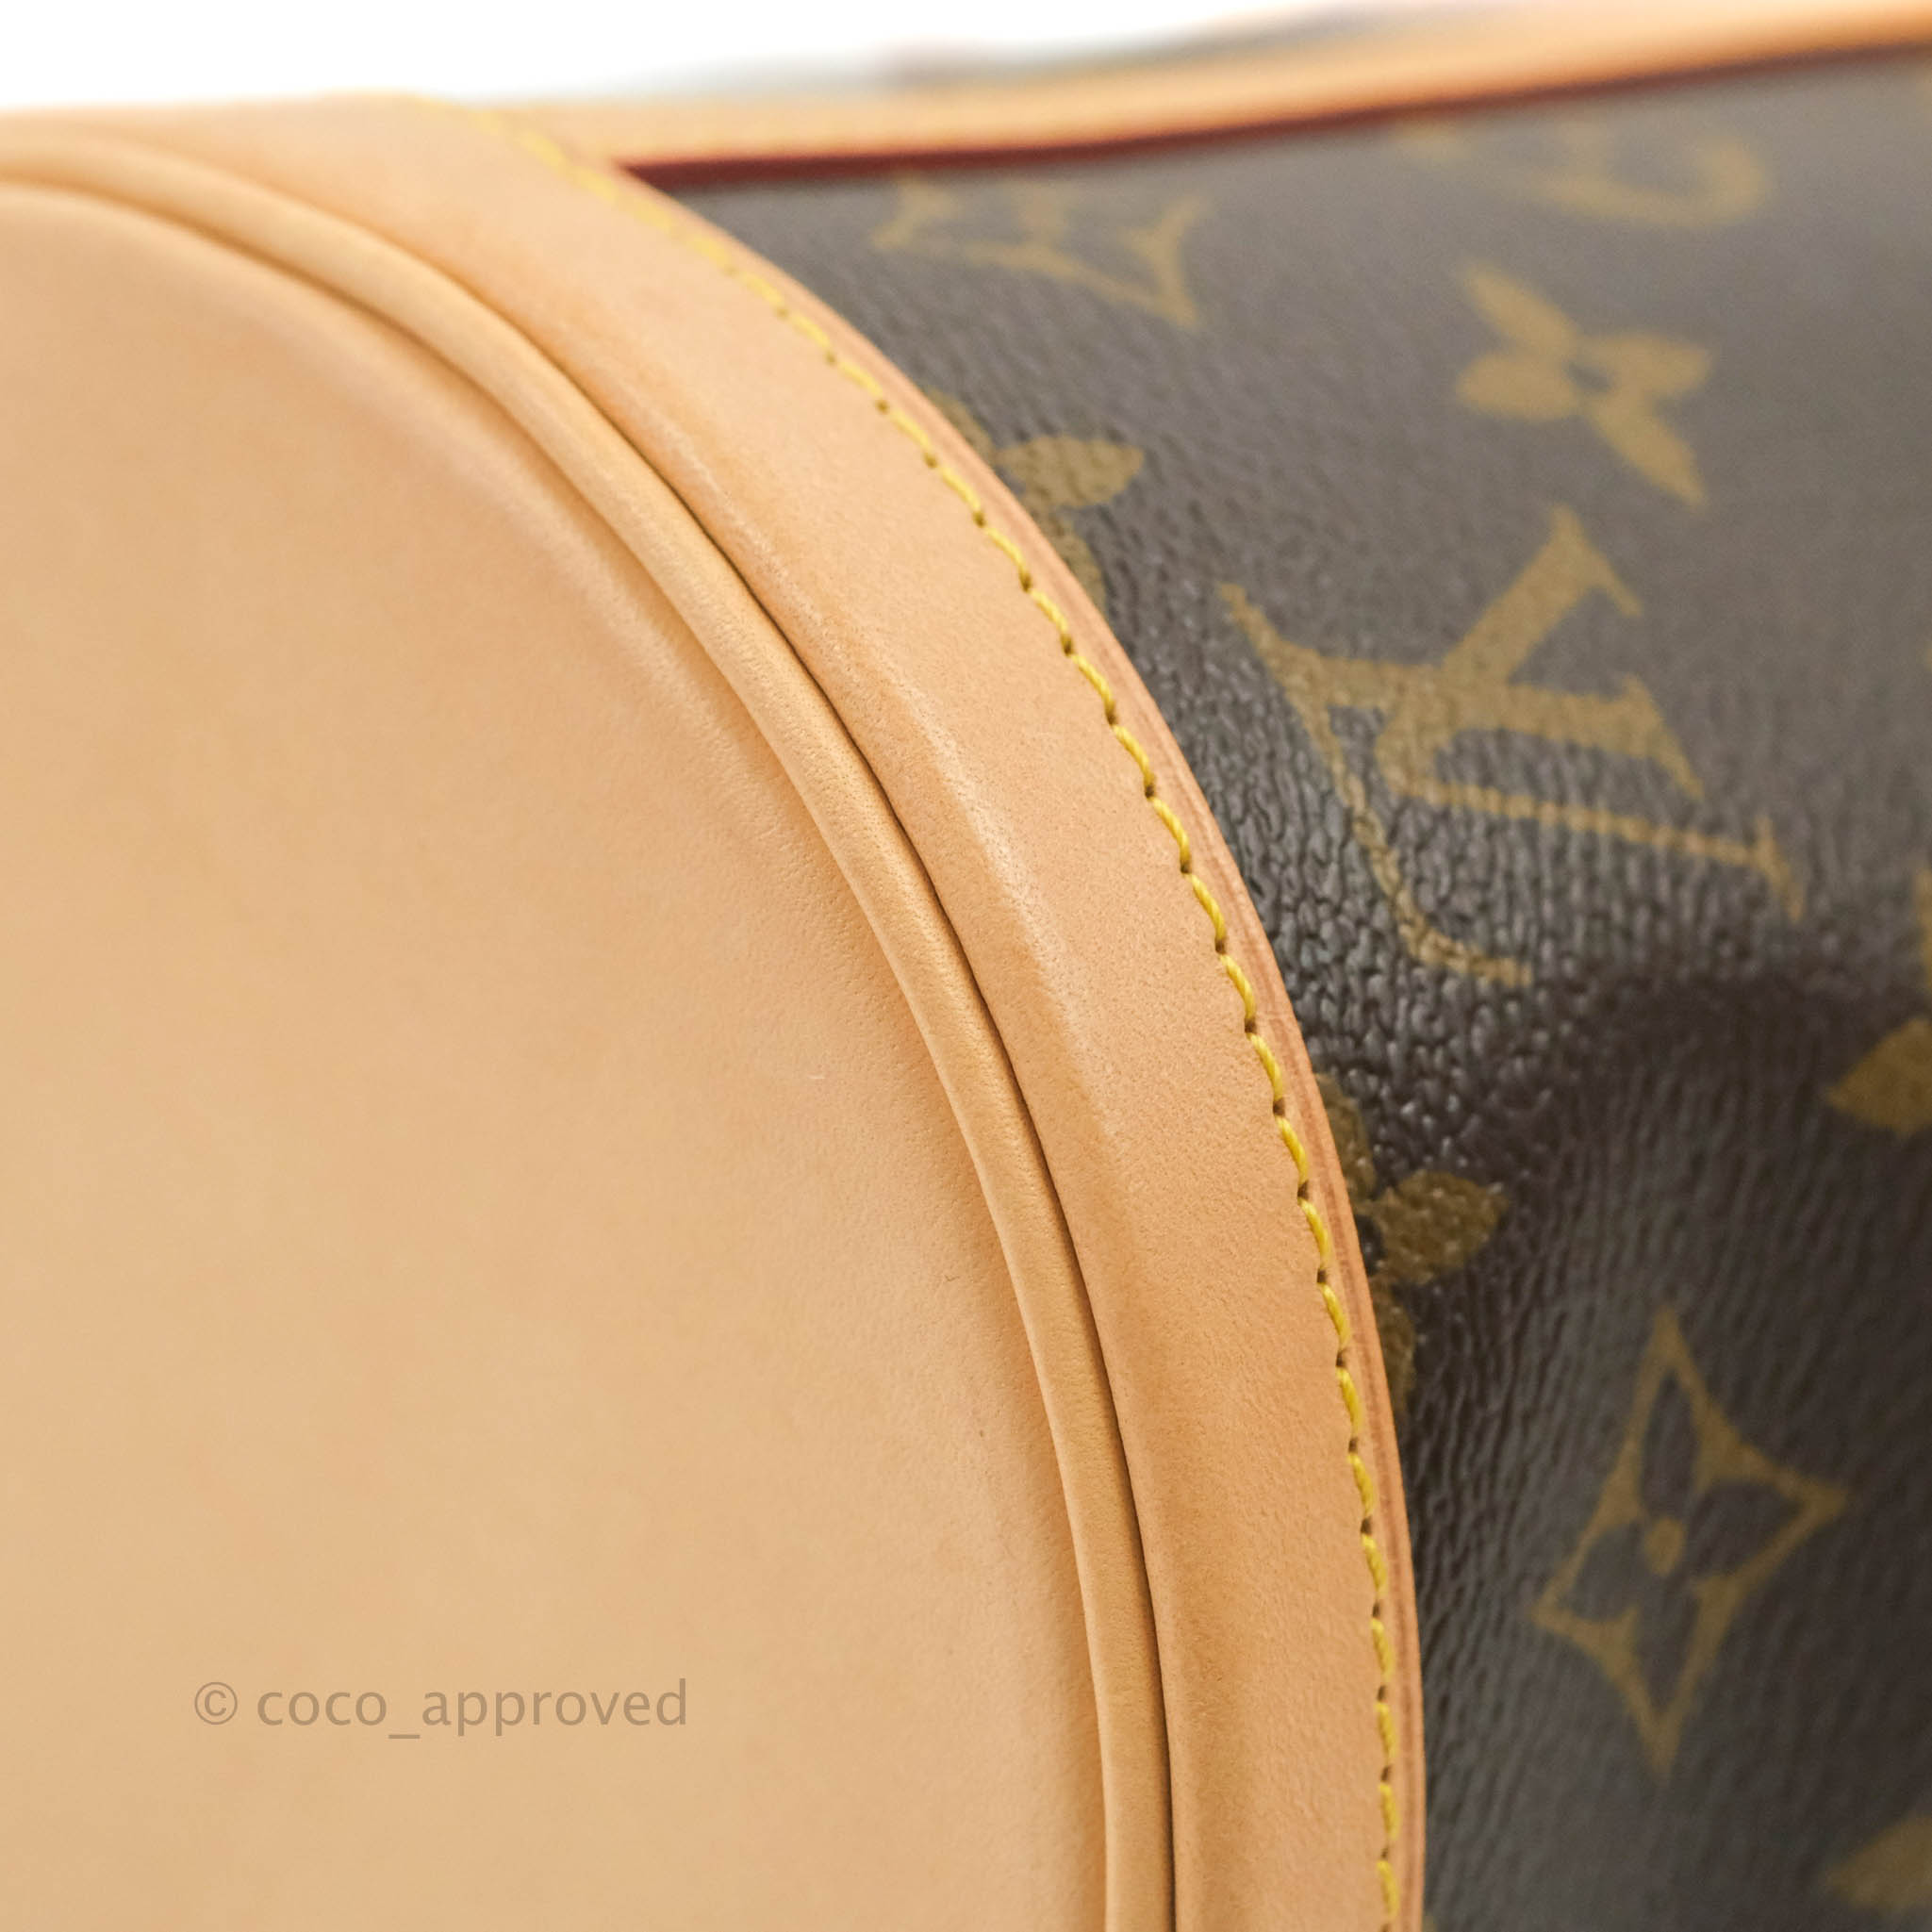 Bag of the Day 40: Louis Vuitton DUFFLE Bucket Bag Monogram Canvas